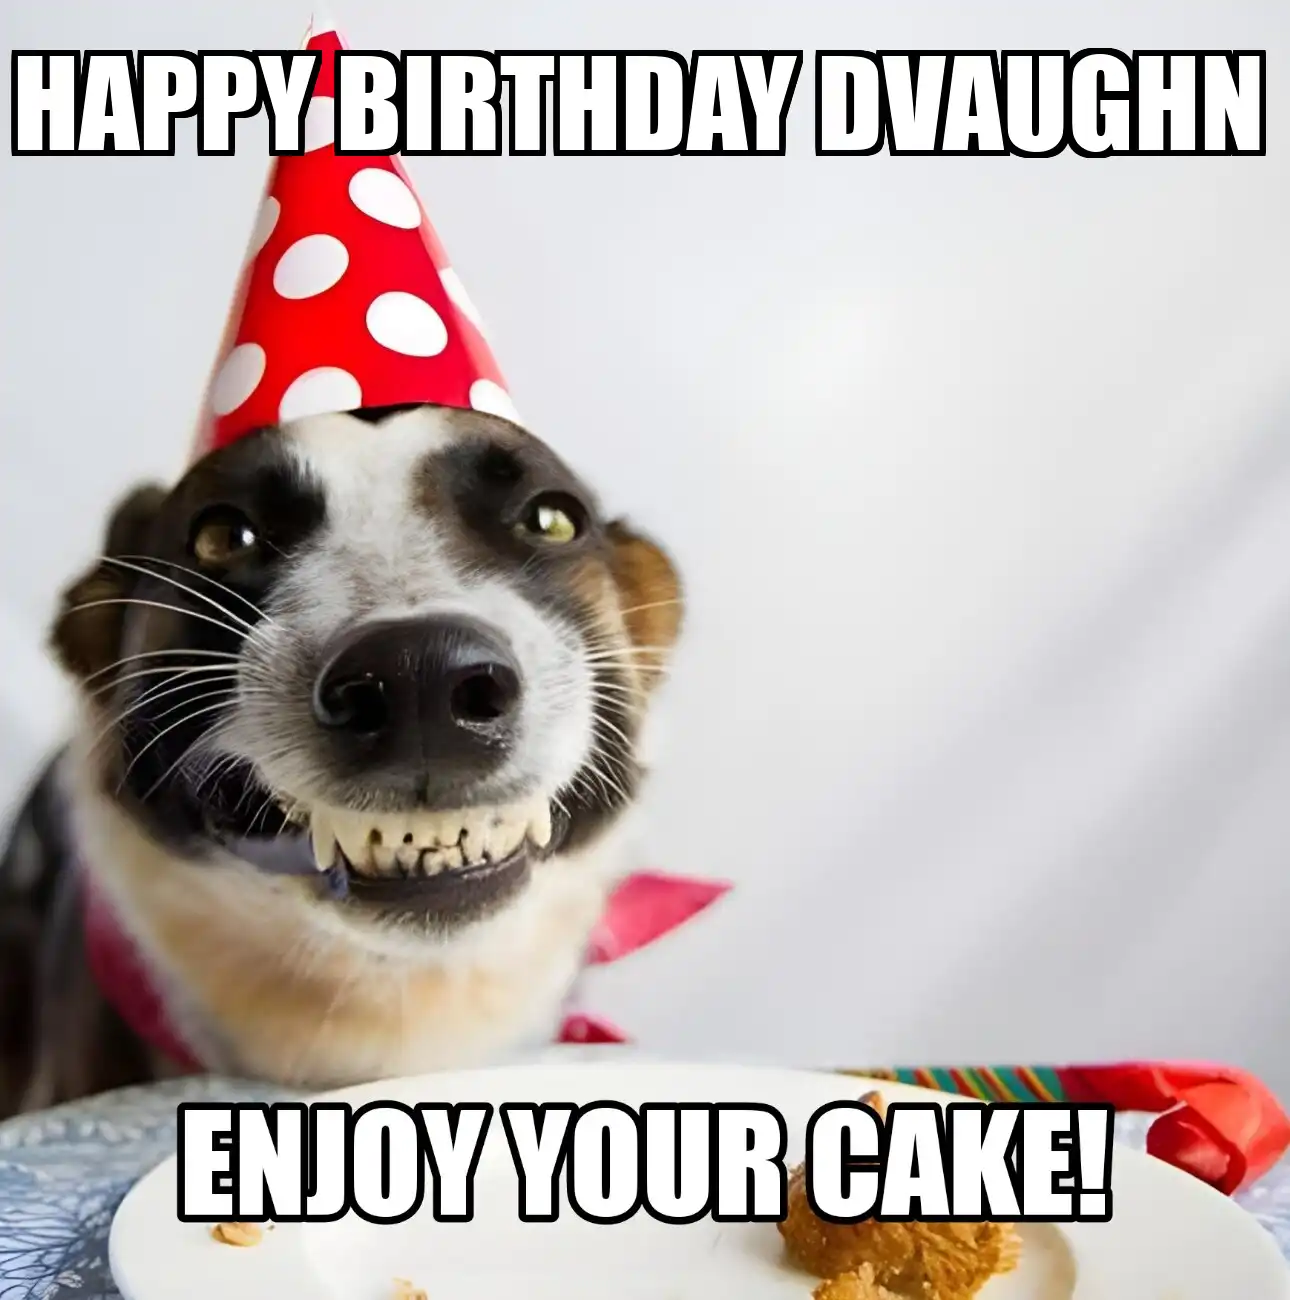 Happy Birthday Dvaughn Enjoy Your Cake Dog Meme